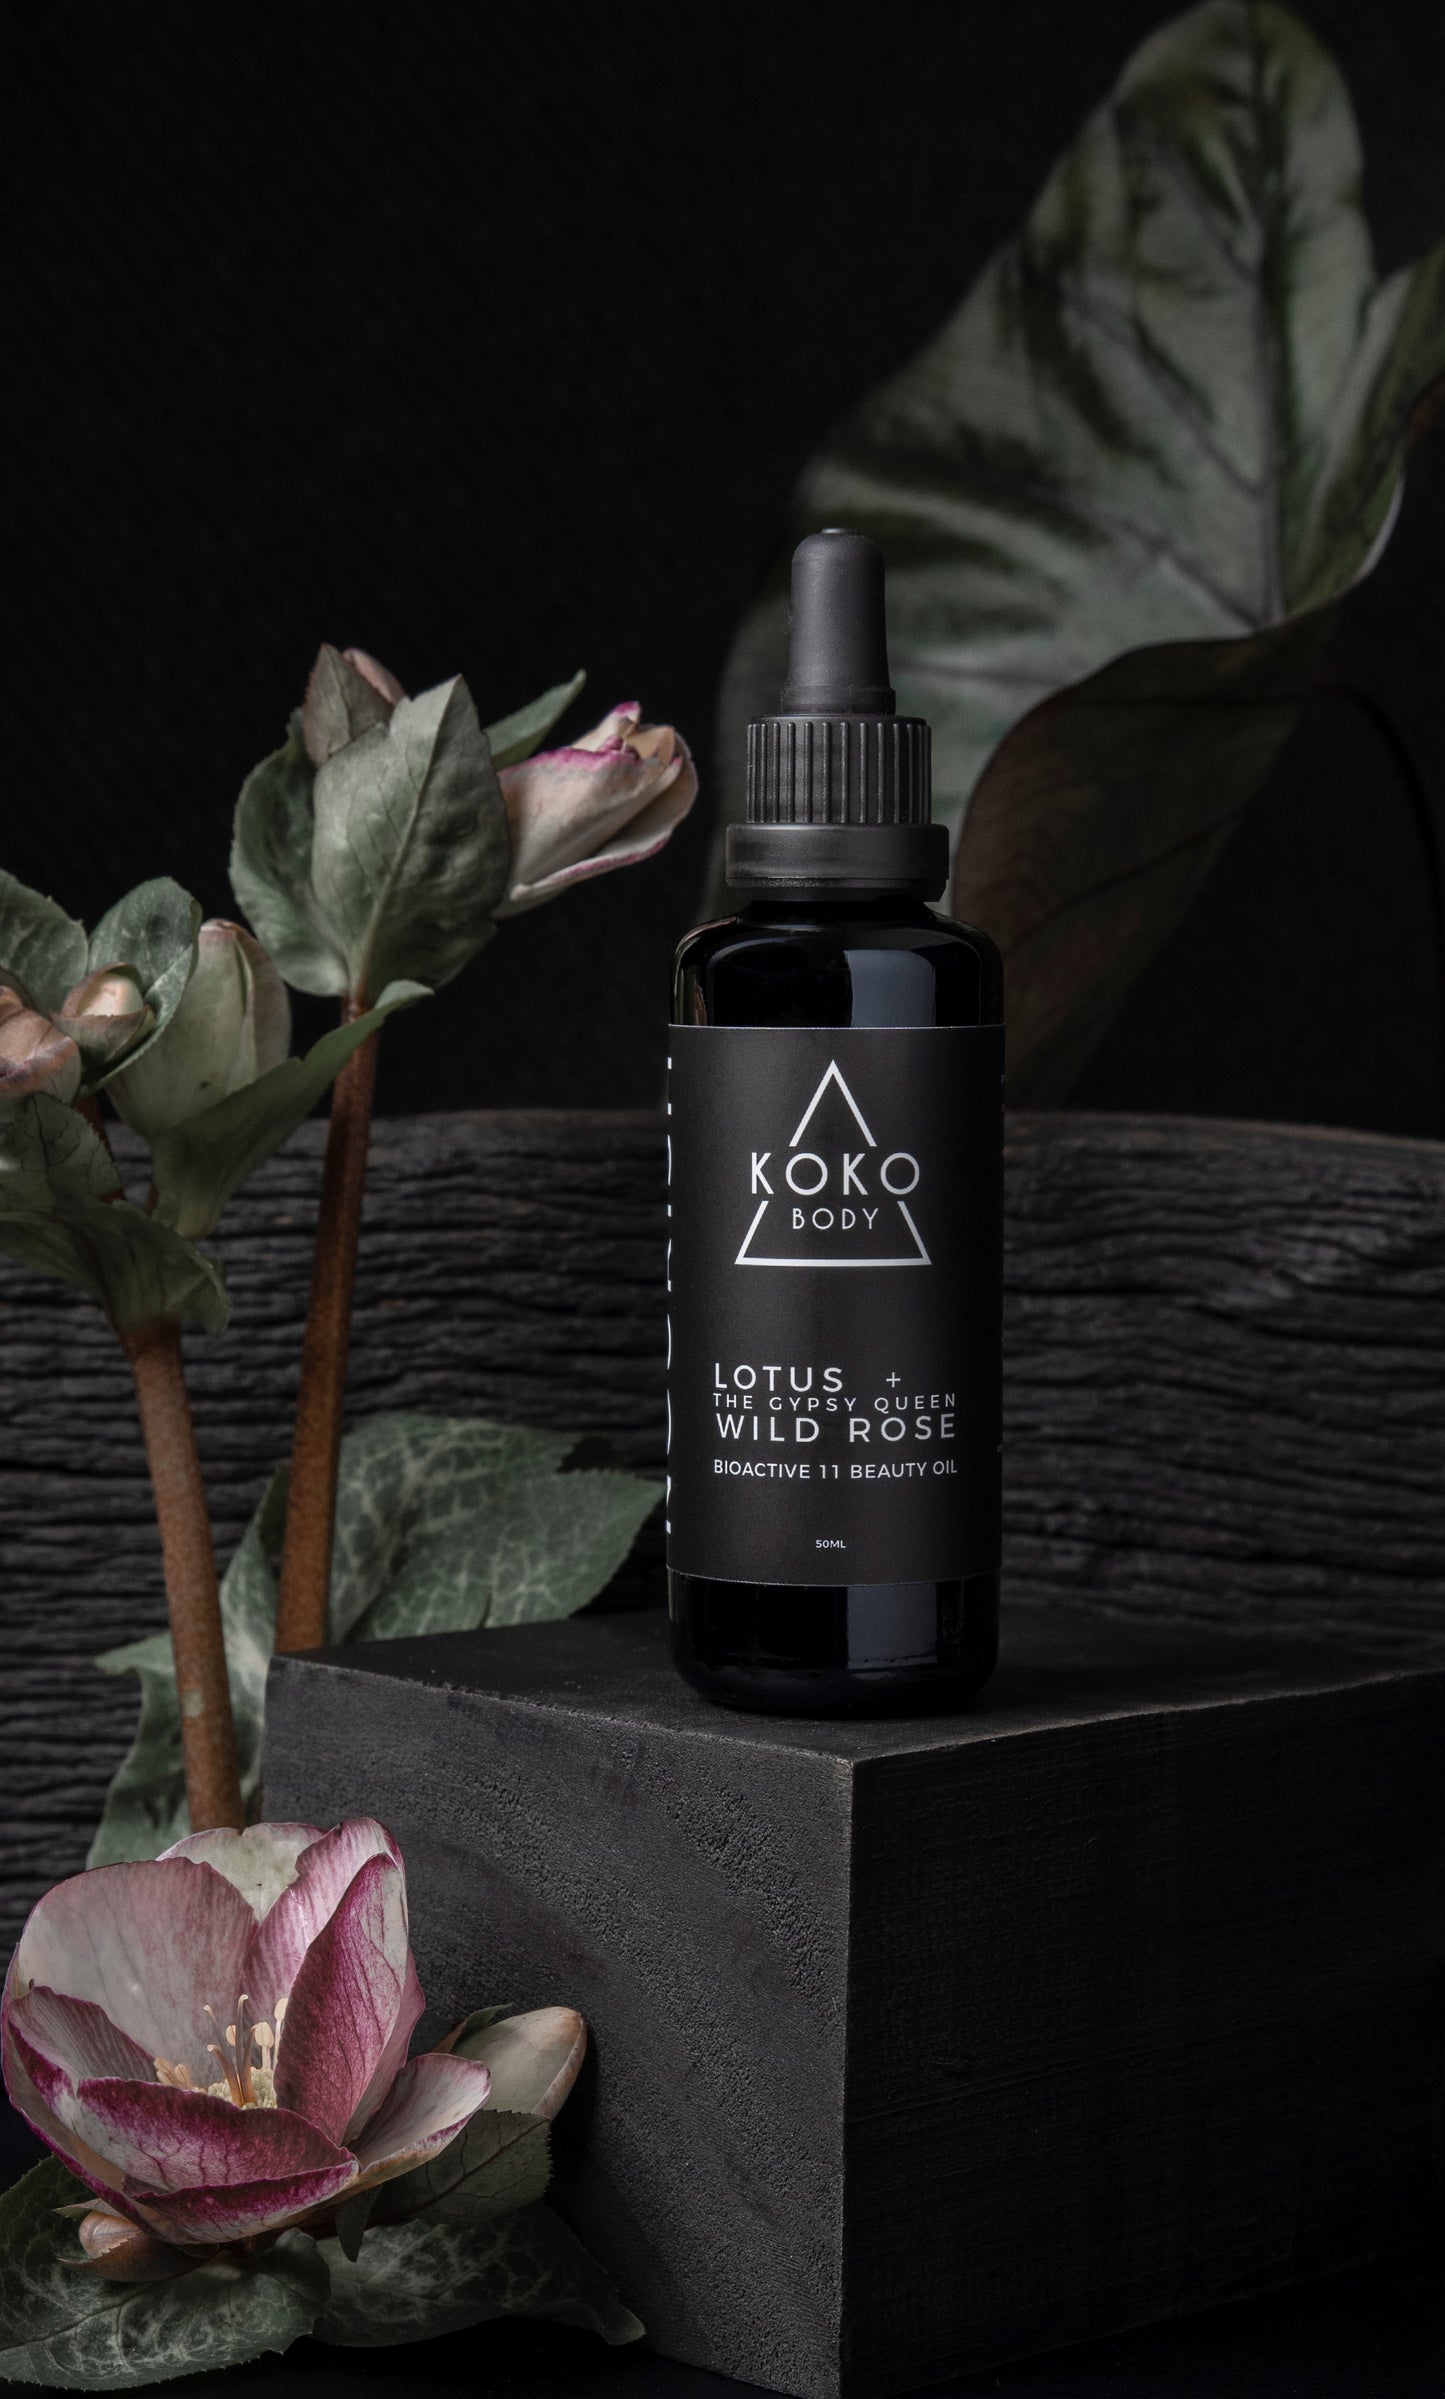 Lotus + Wild Rose Bioactive Beauty Oil